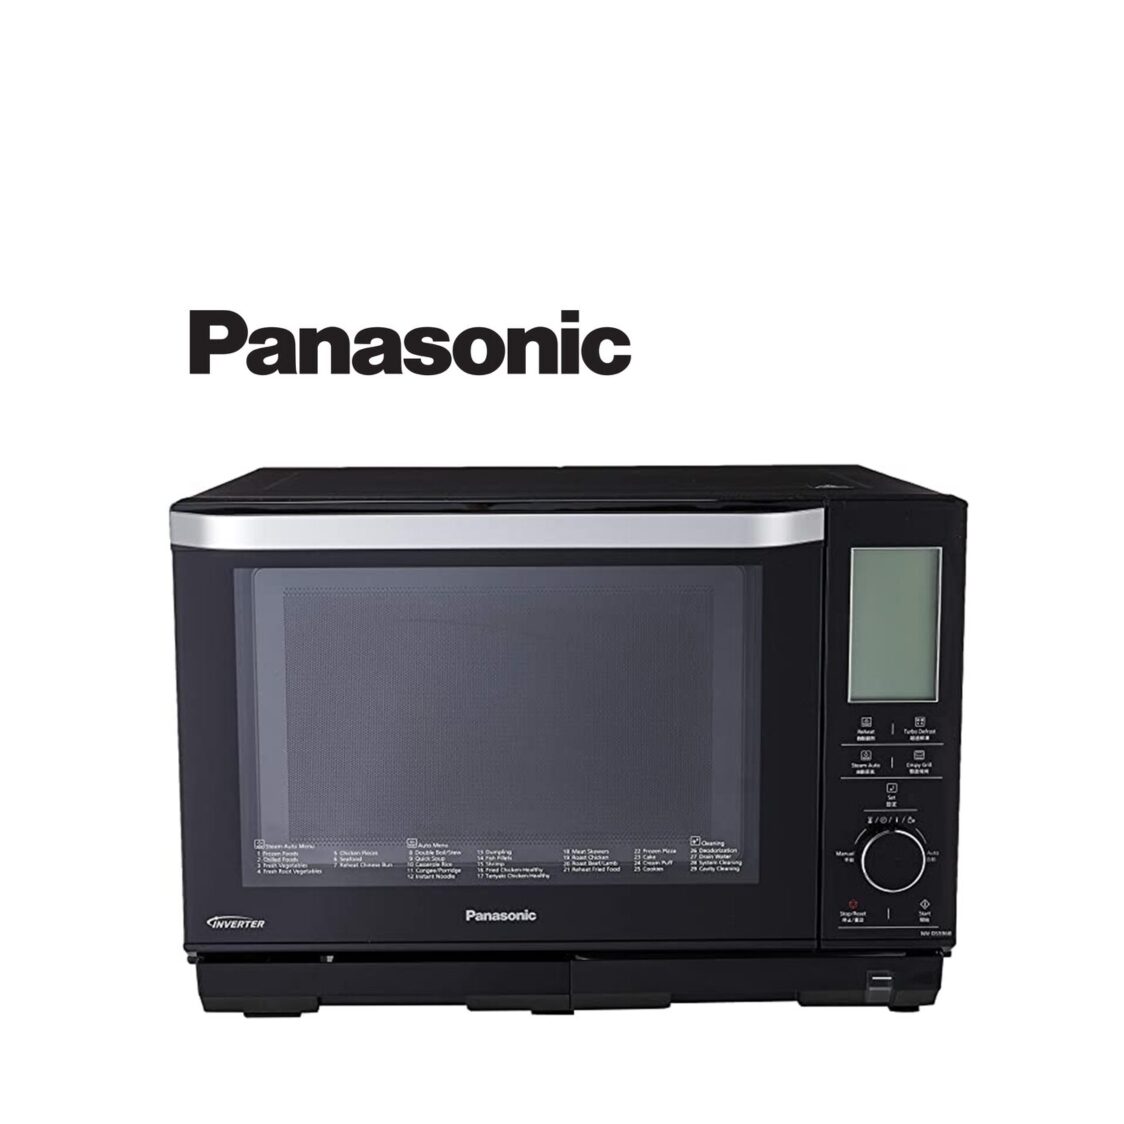 PANASONIC 27L 1000W Steam Combination Microwave Oven NN-DS596B